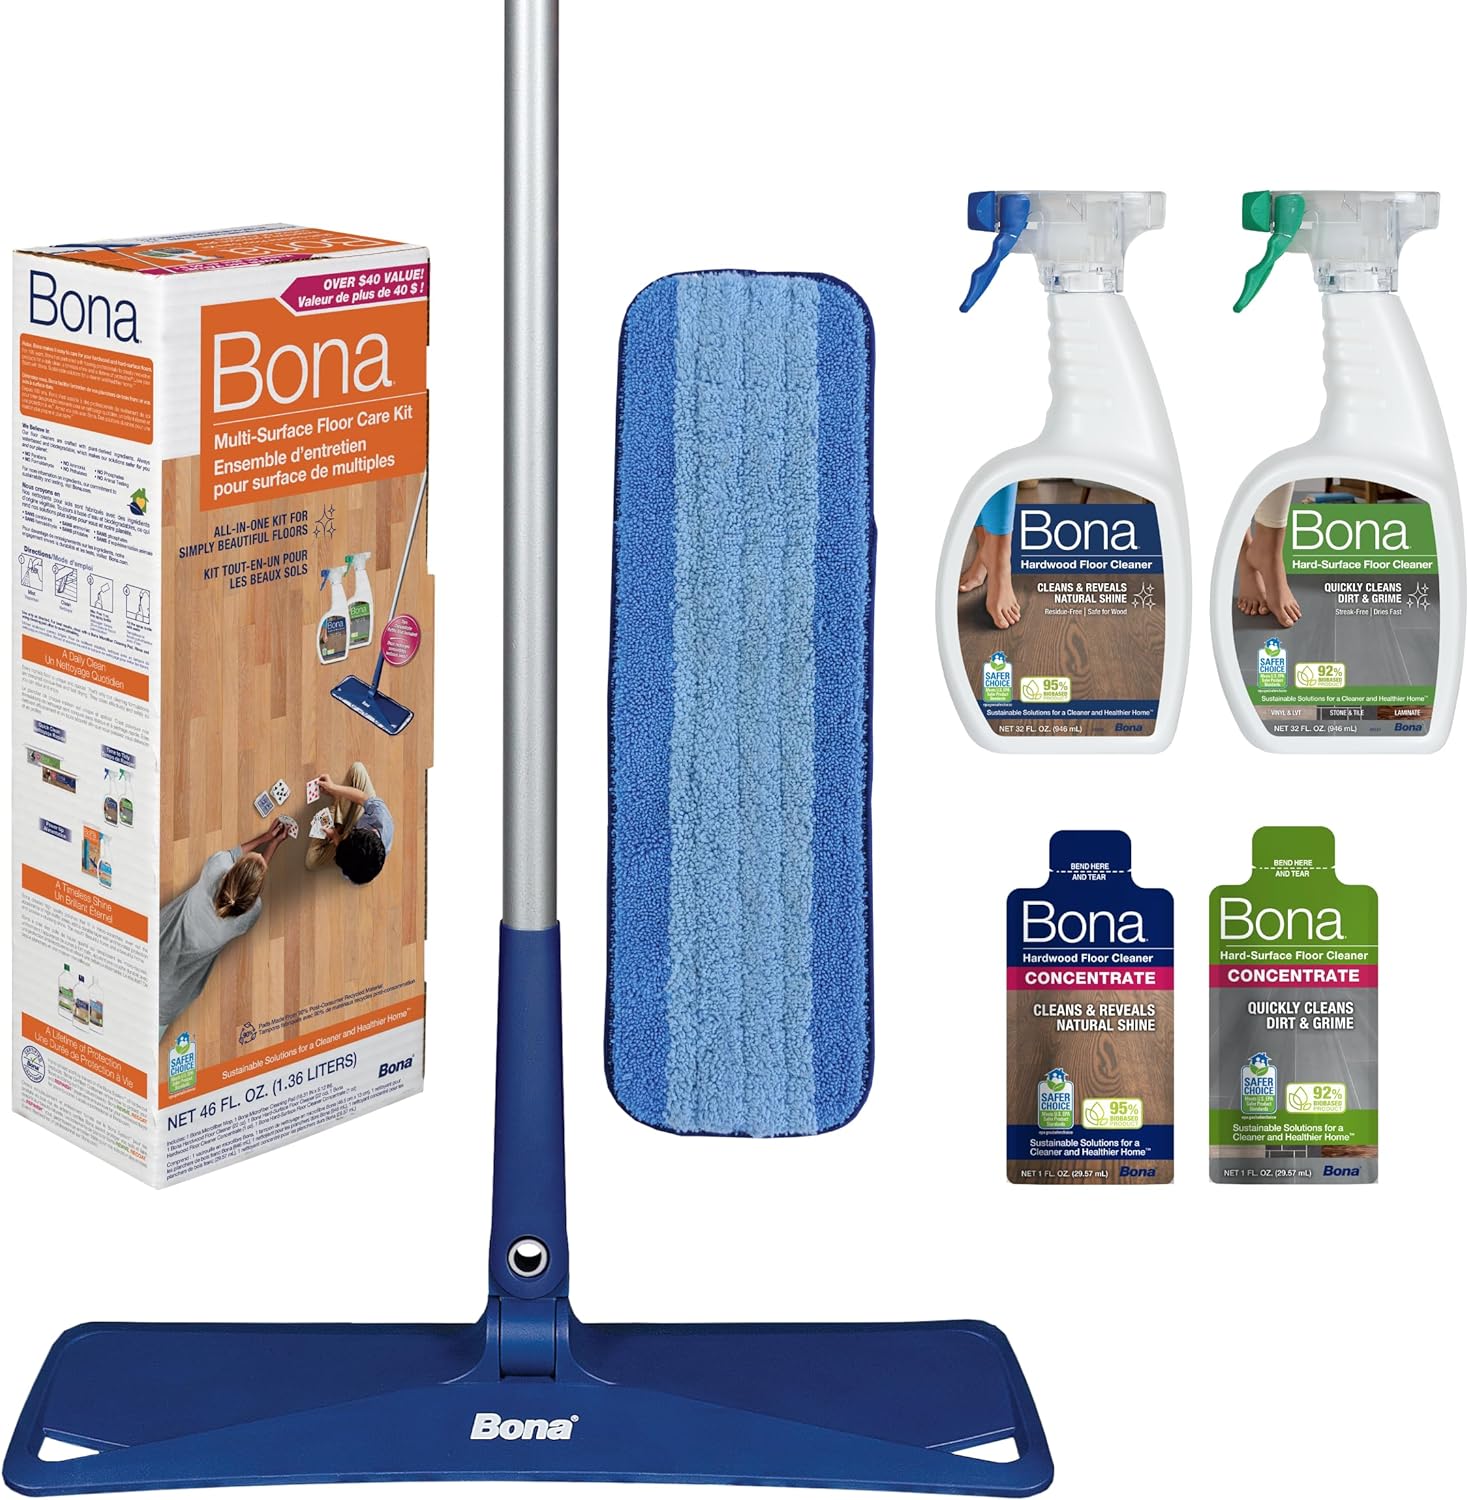 Bona Hard-Surface Floor Care Kit - Includes Microfiber Mop, Microfiber Cleaning Pad, Hardwood Floor Cleaning Solution, and Multi-Surface Floor Cleaning Solution - Floor Cleaning Kit for Hard Floors